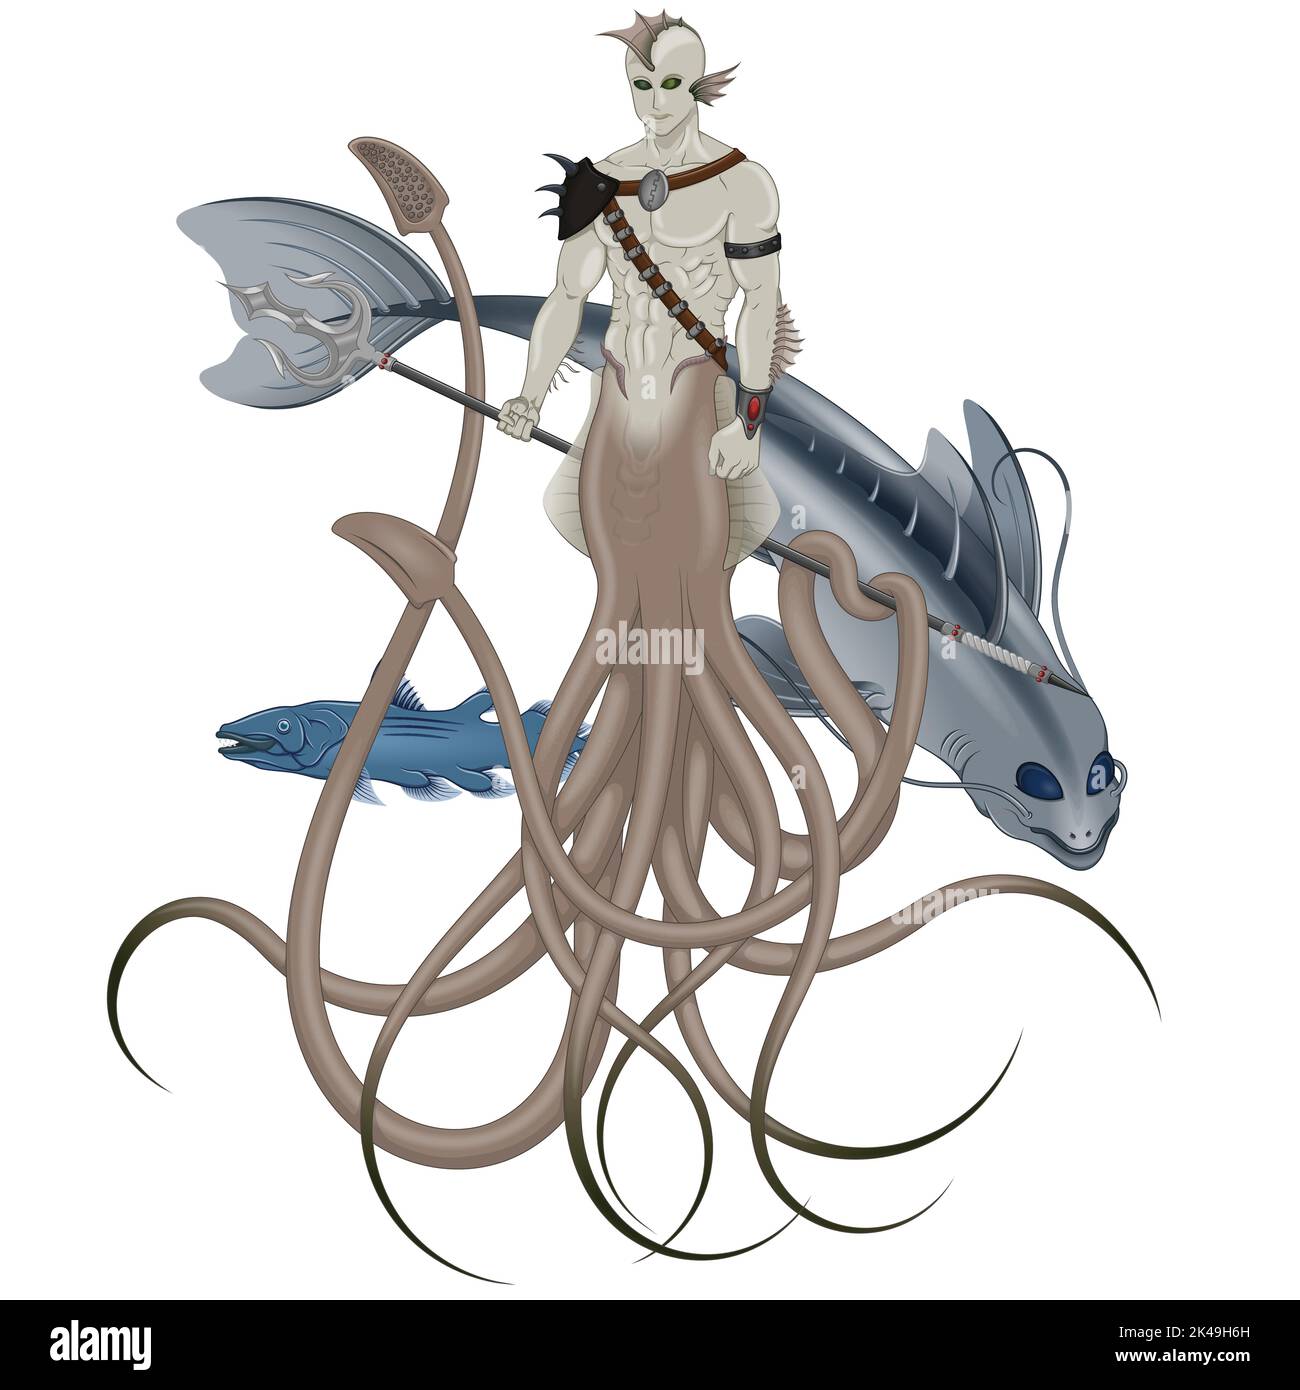 Half man half squid creature vector design, fantasy creature with trident, sea creature with tentacles Stock Vector